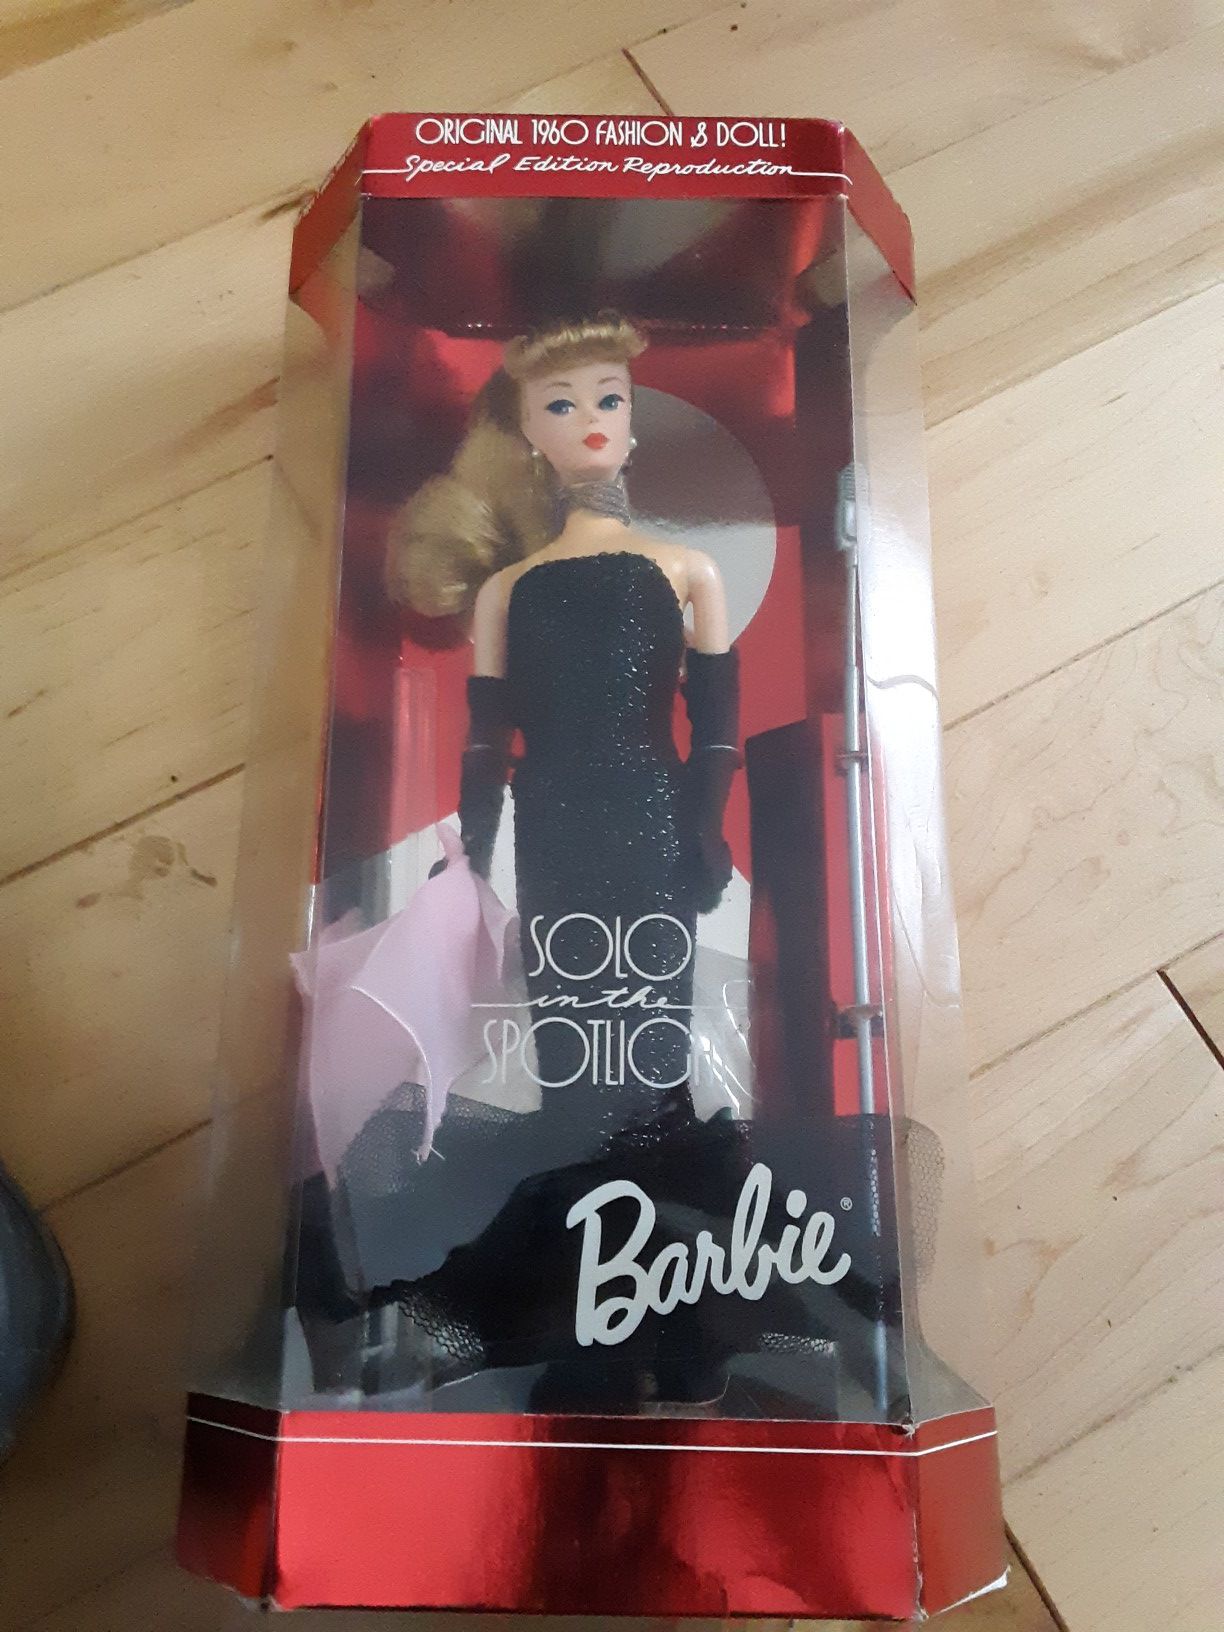 Original 1960 fashion and Barbie doll